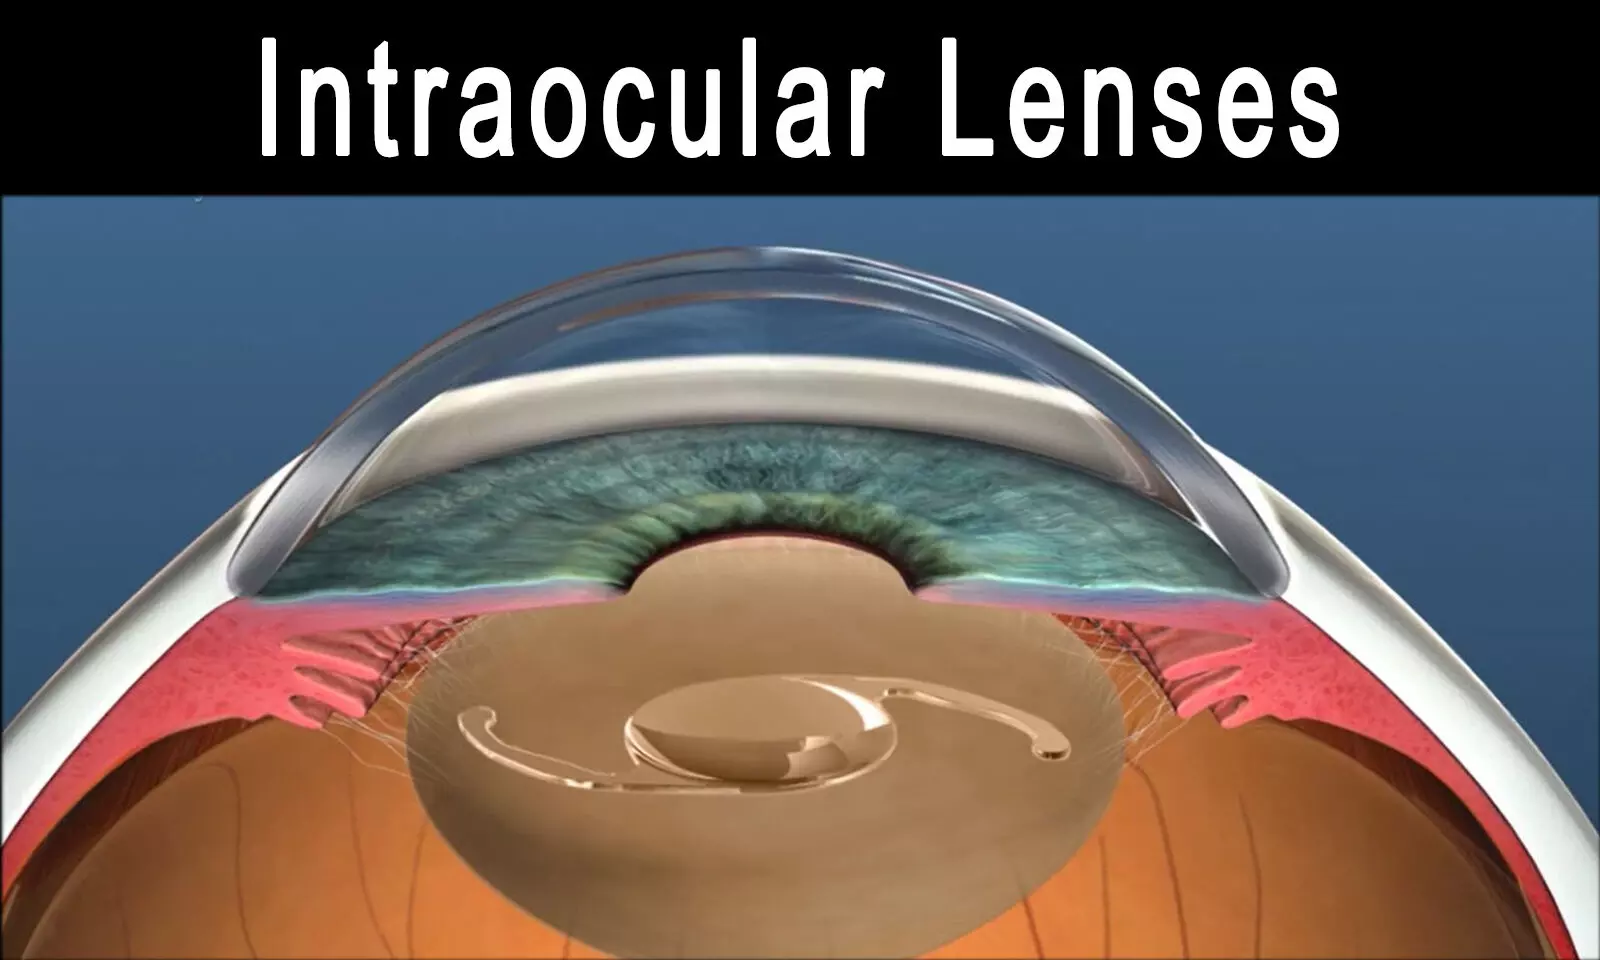 Implantation techniques for reconstruction of anterior segment after ocular trauma